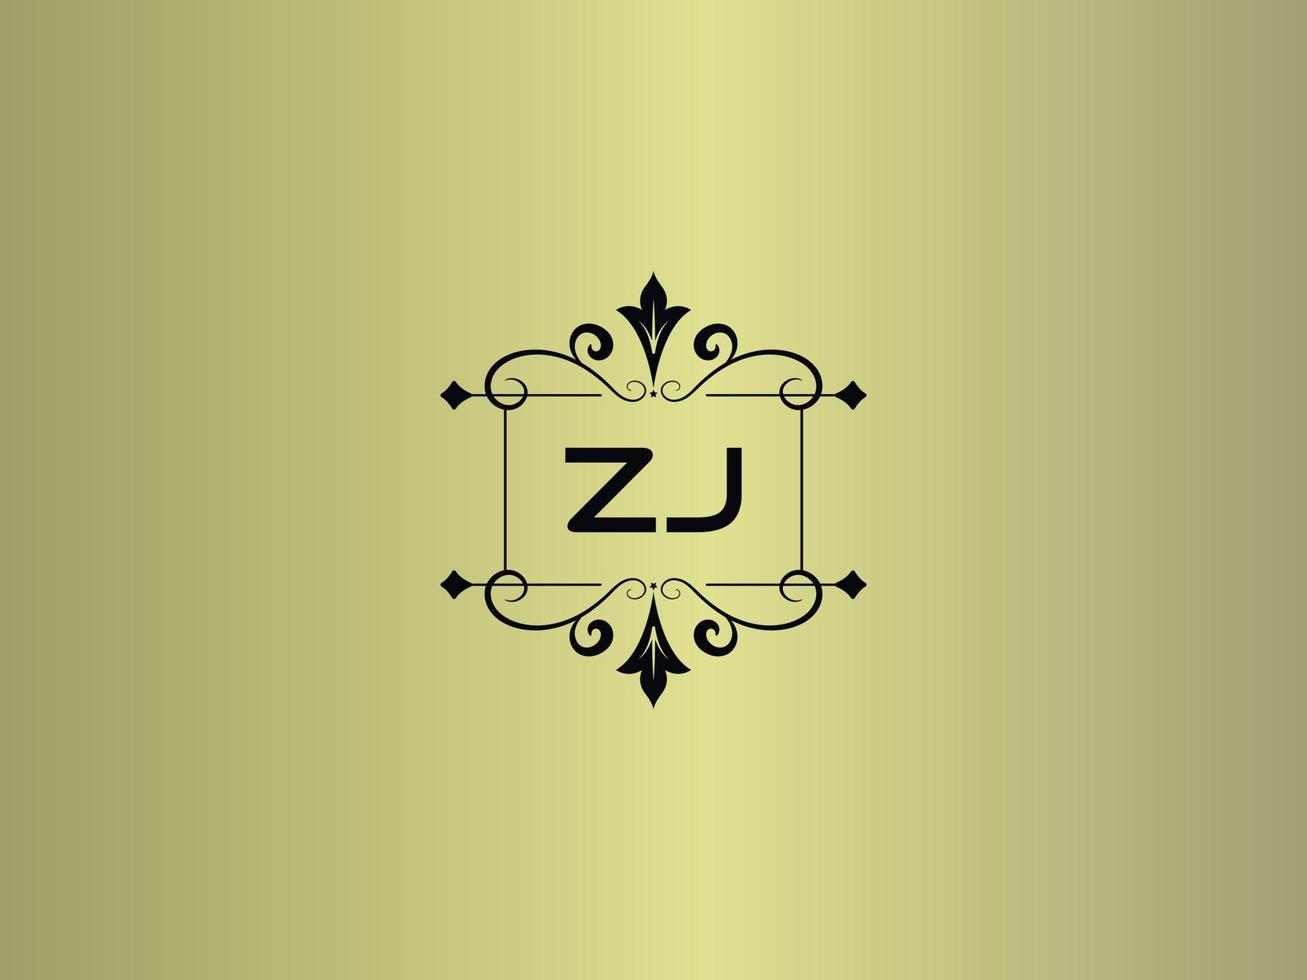 kreatives zj-logobild, erstklassiges zj-luxusbriefdesign vektor